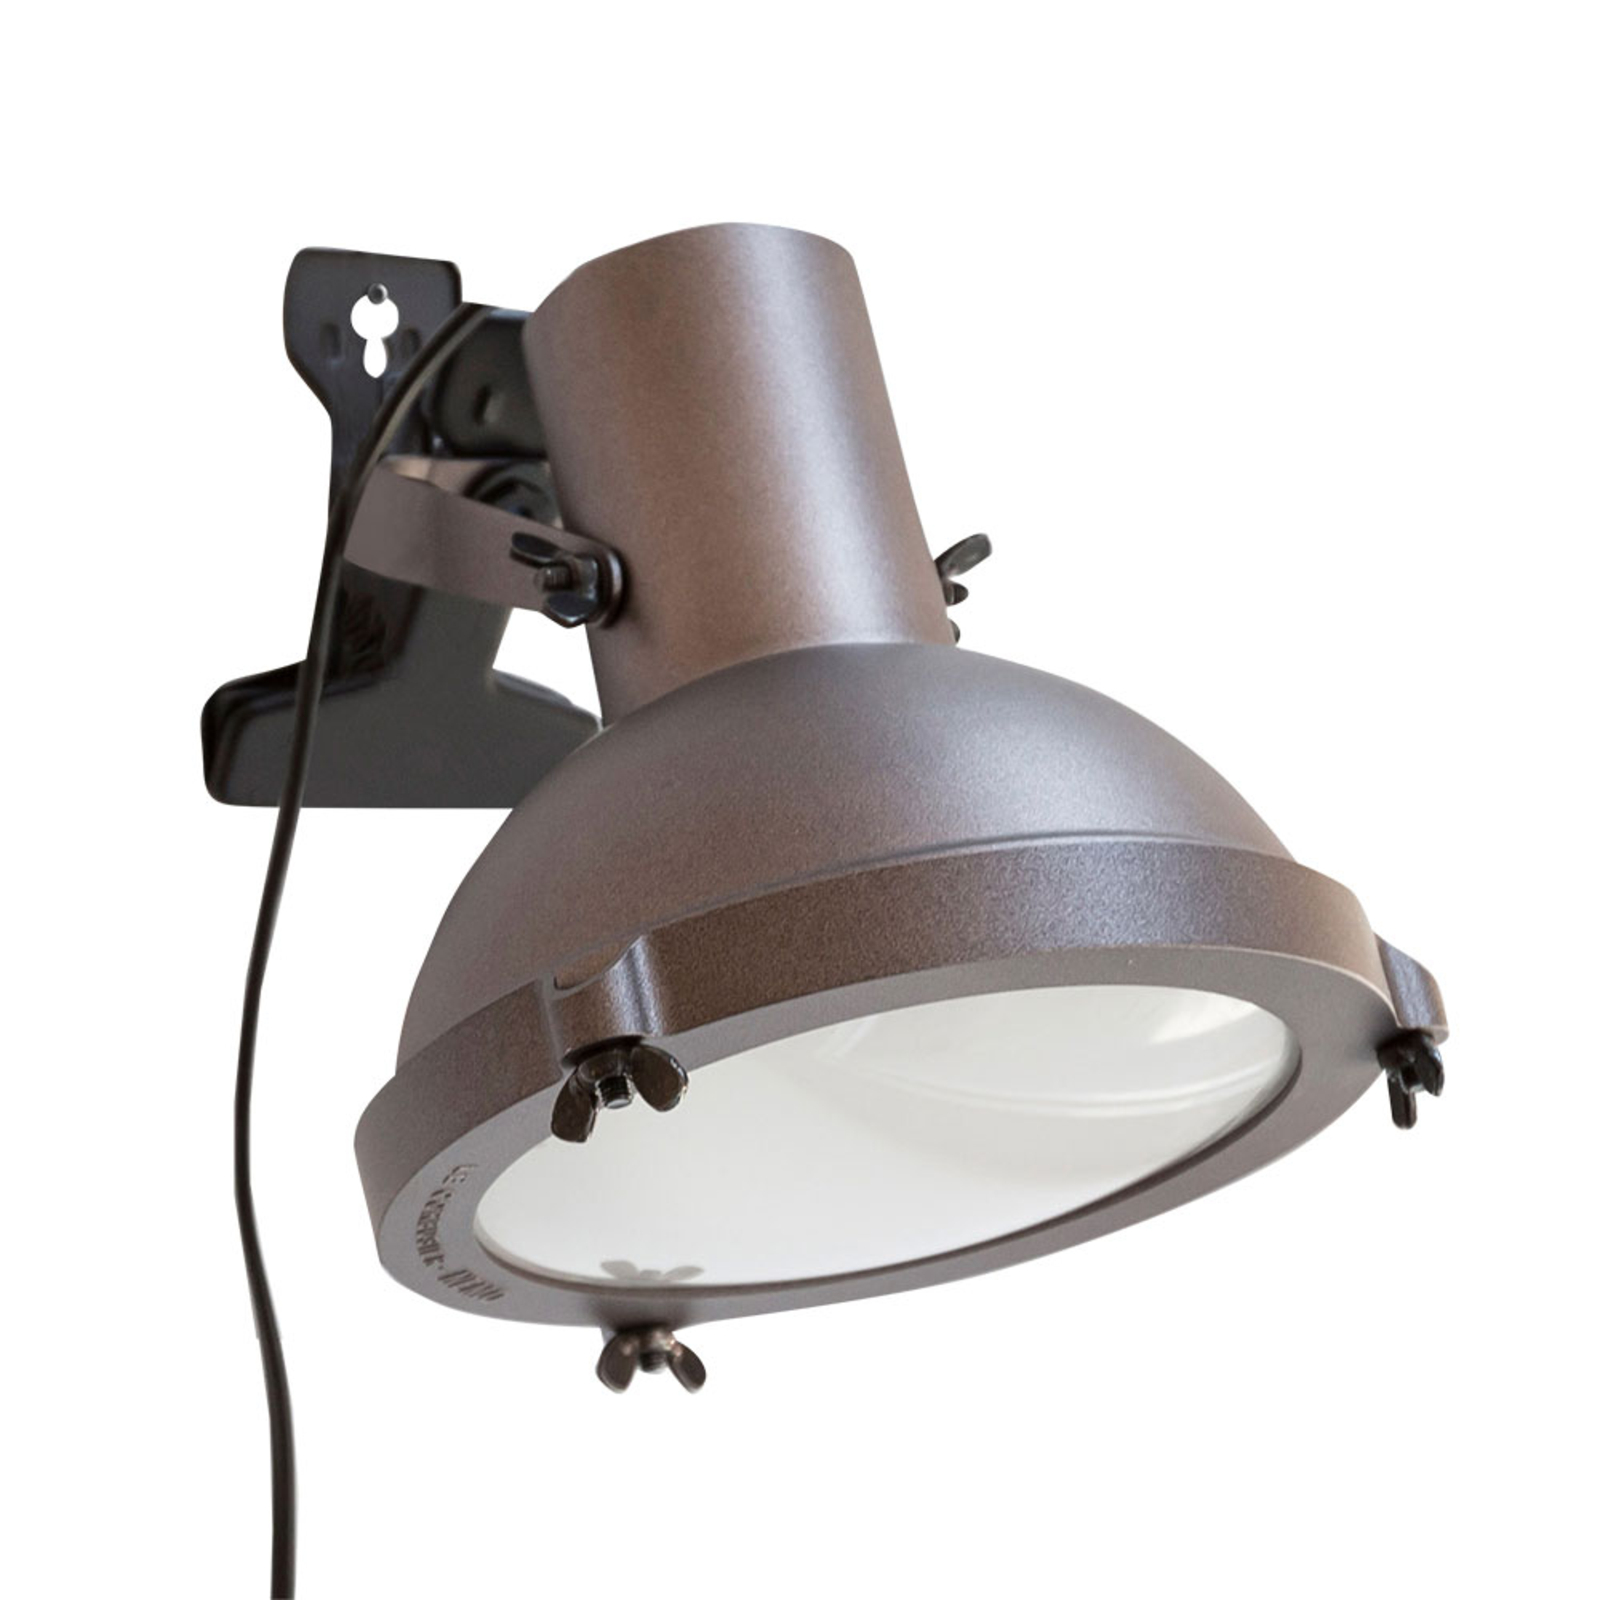 NEMO Projecteur 165 wandlamp, mokka bruin